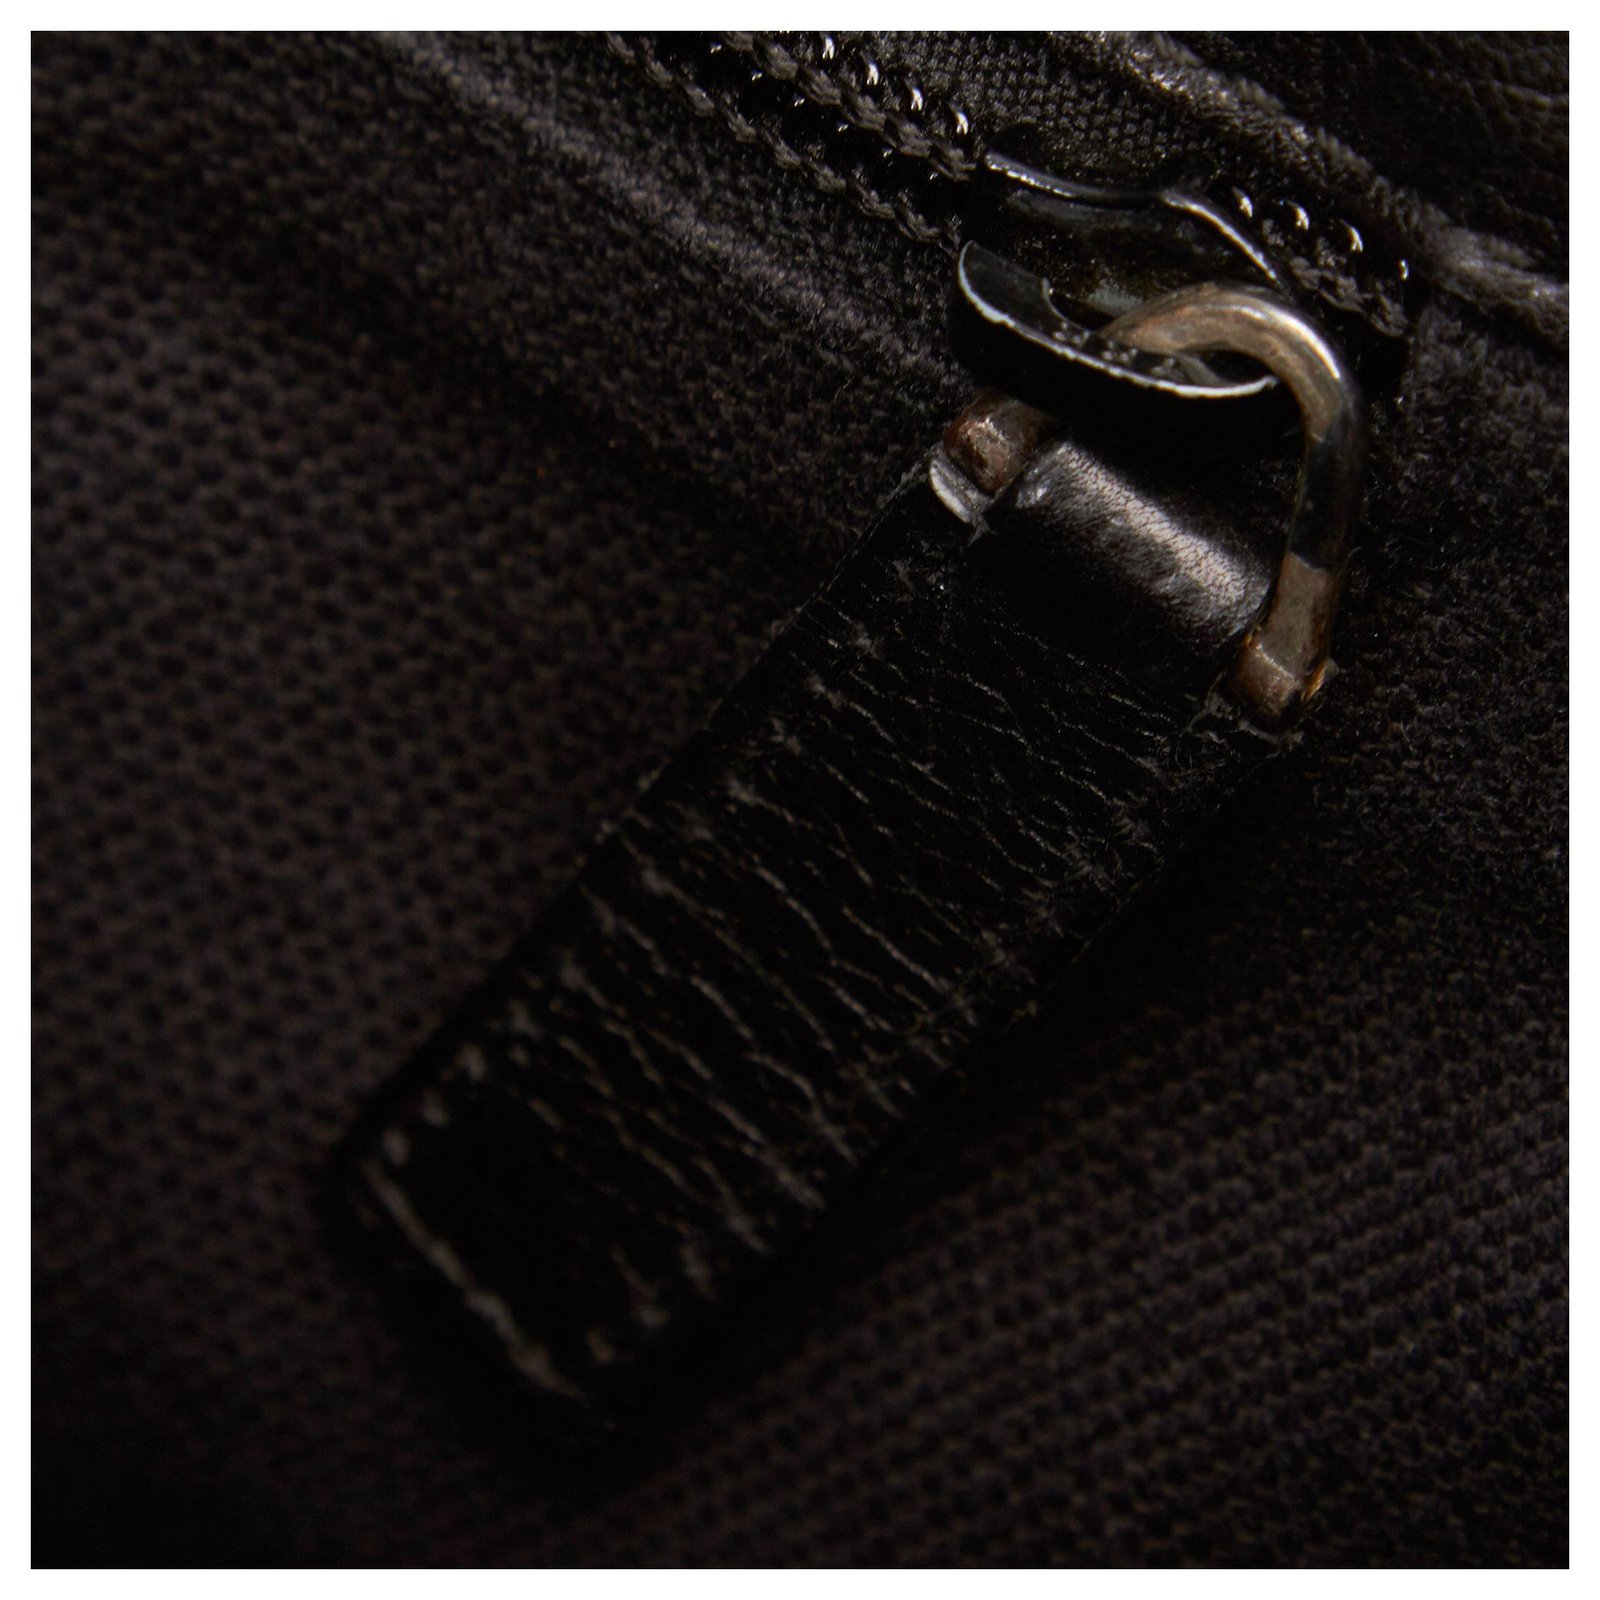 Mombasa leather crossbody bag Yves Saint Laurent Black in Leather - 30584936